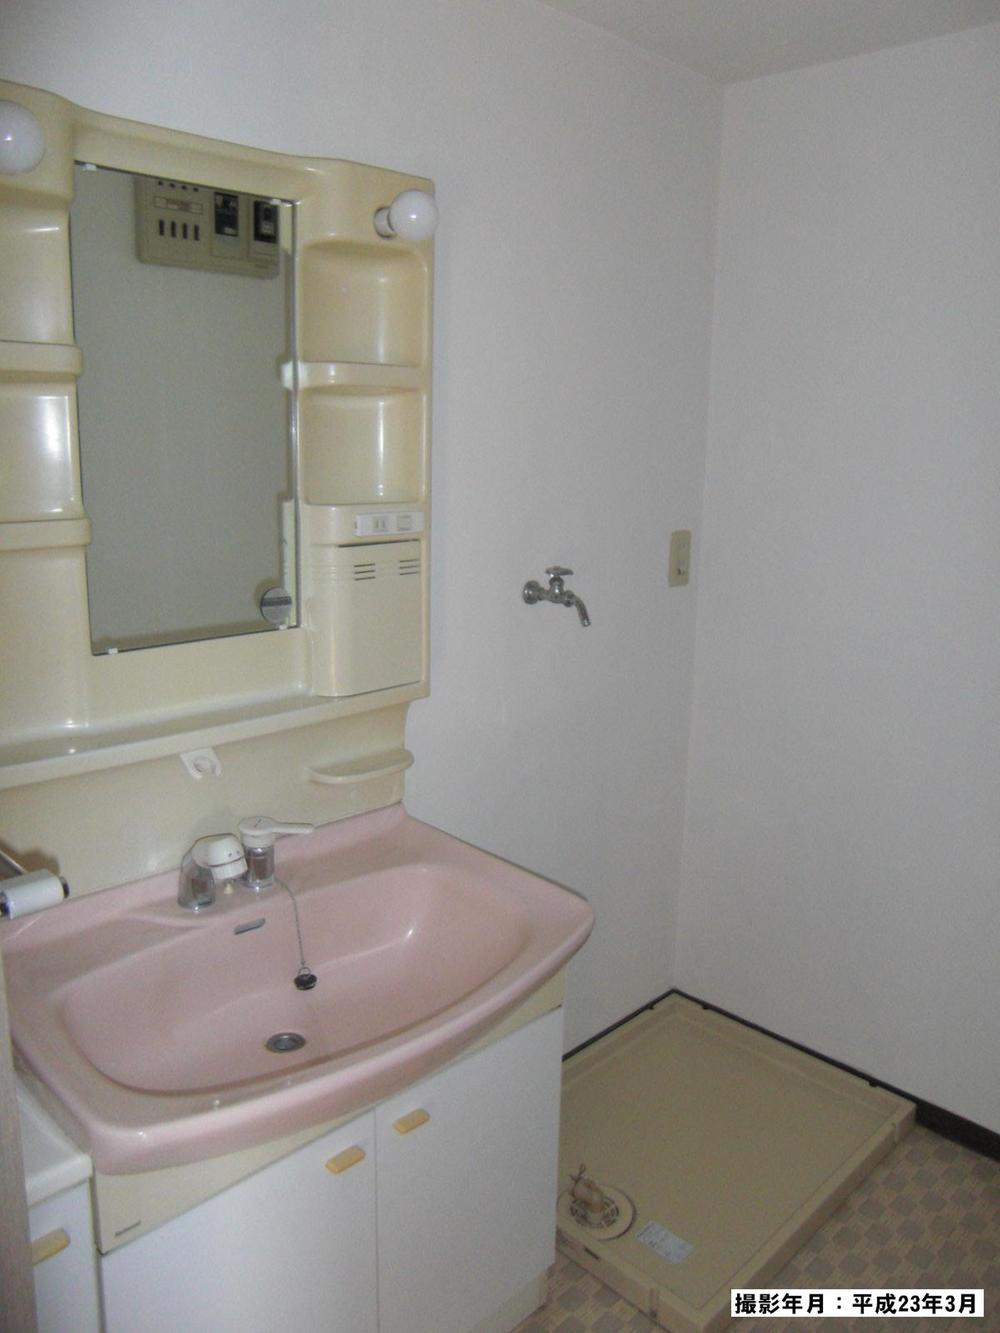 Wash basin, toilet. Indoor (March 2011) shooting